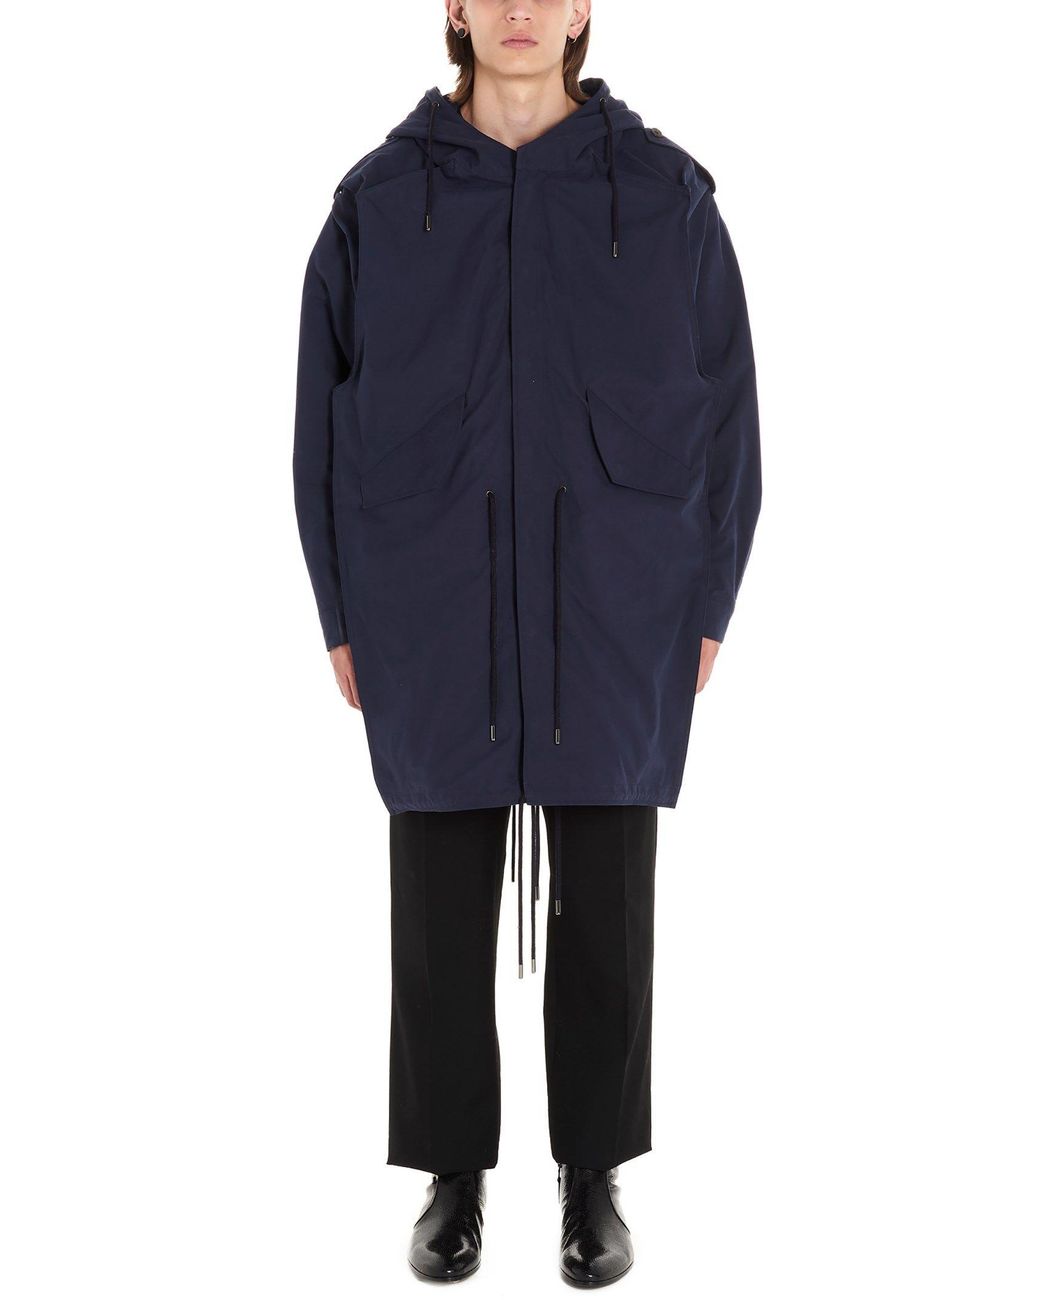 Y. Project Blue Cotton Outerwear Jacket for Men - Lyst